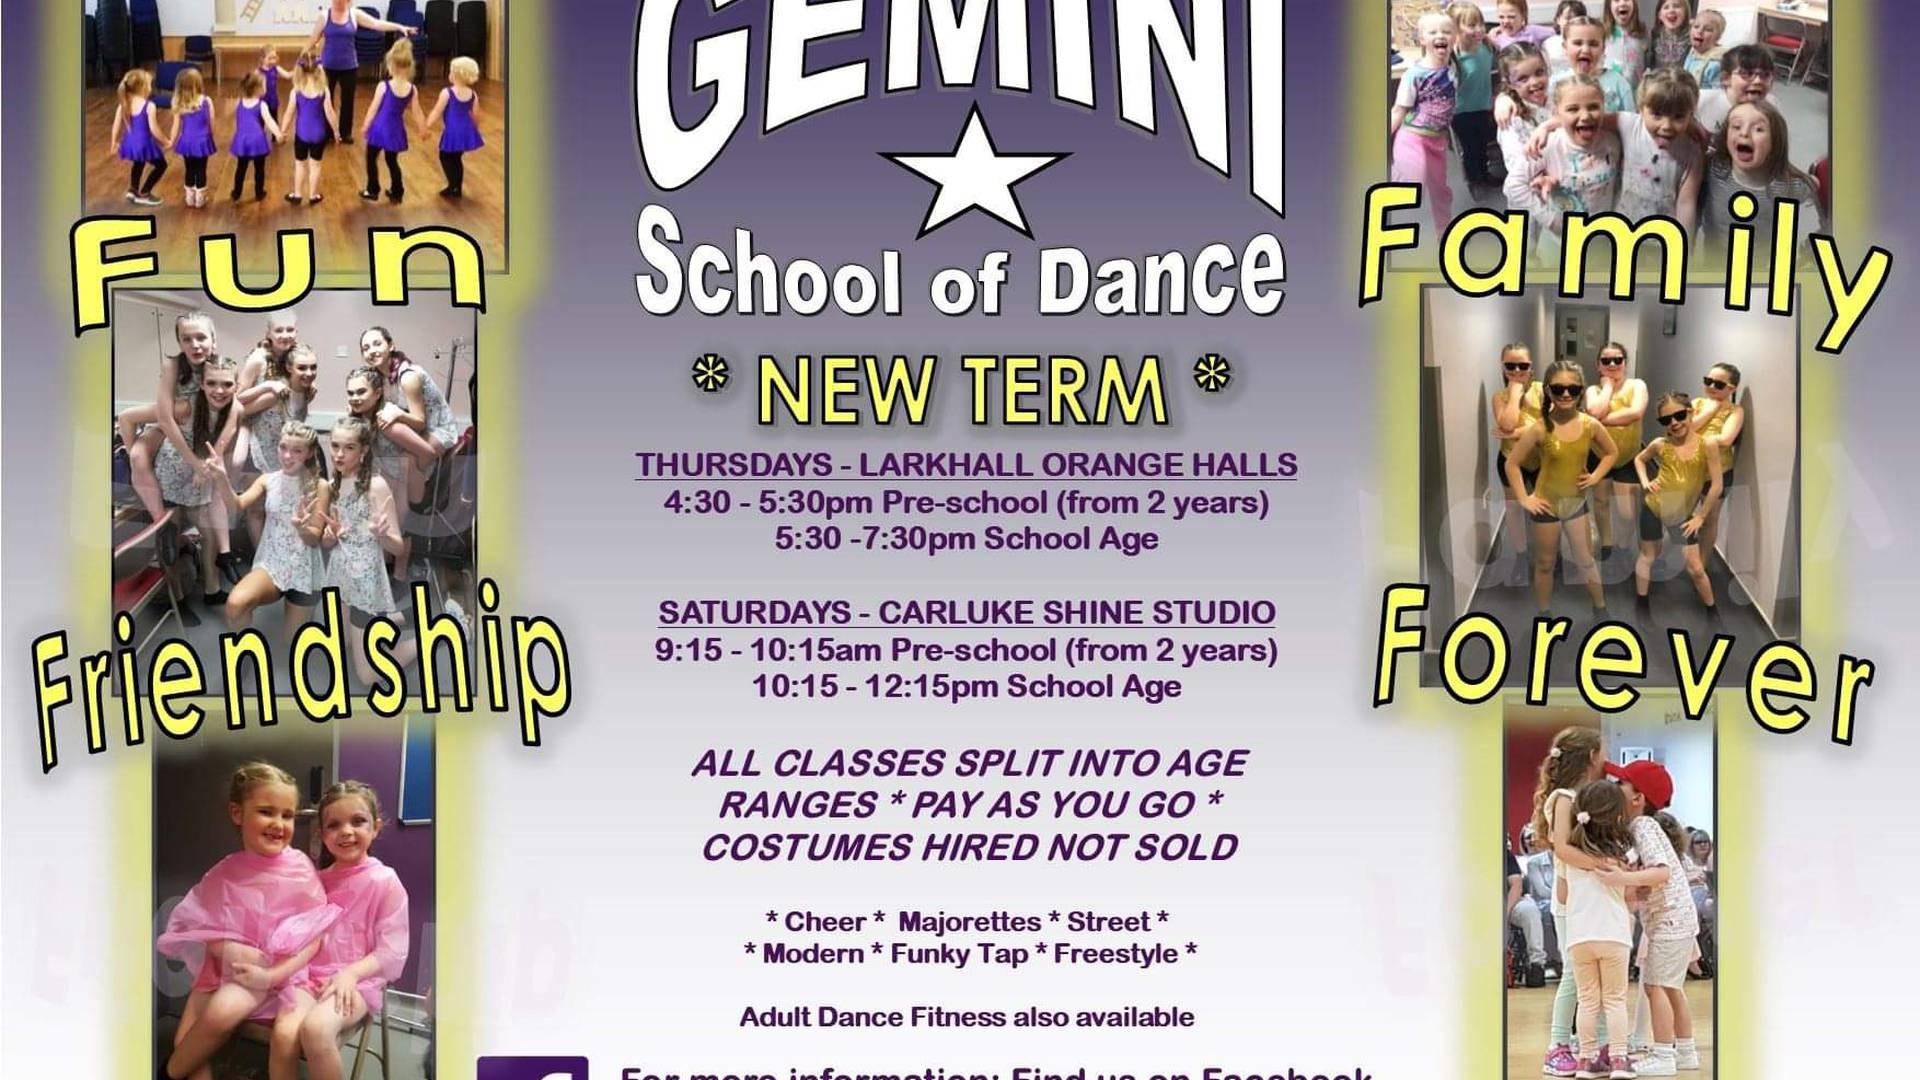 Gemini School of Dance photo